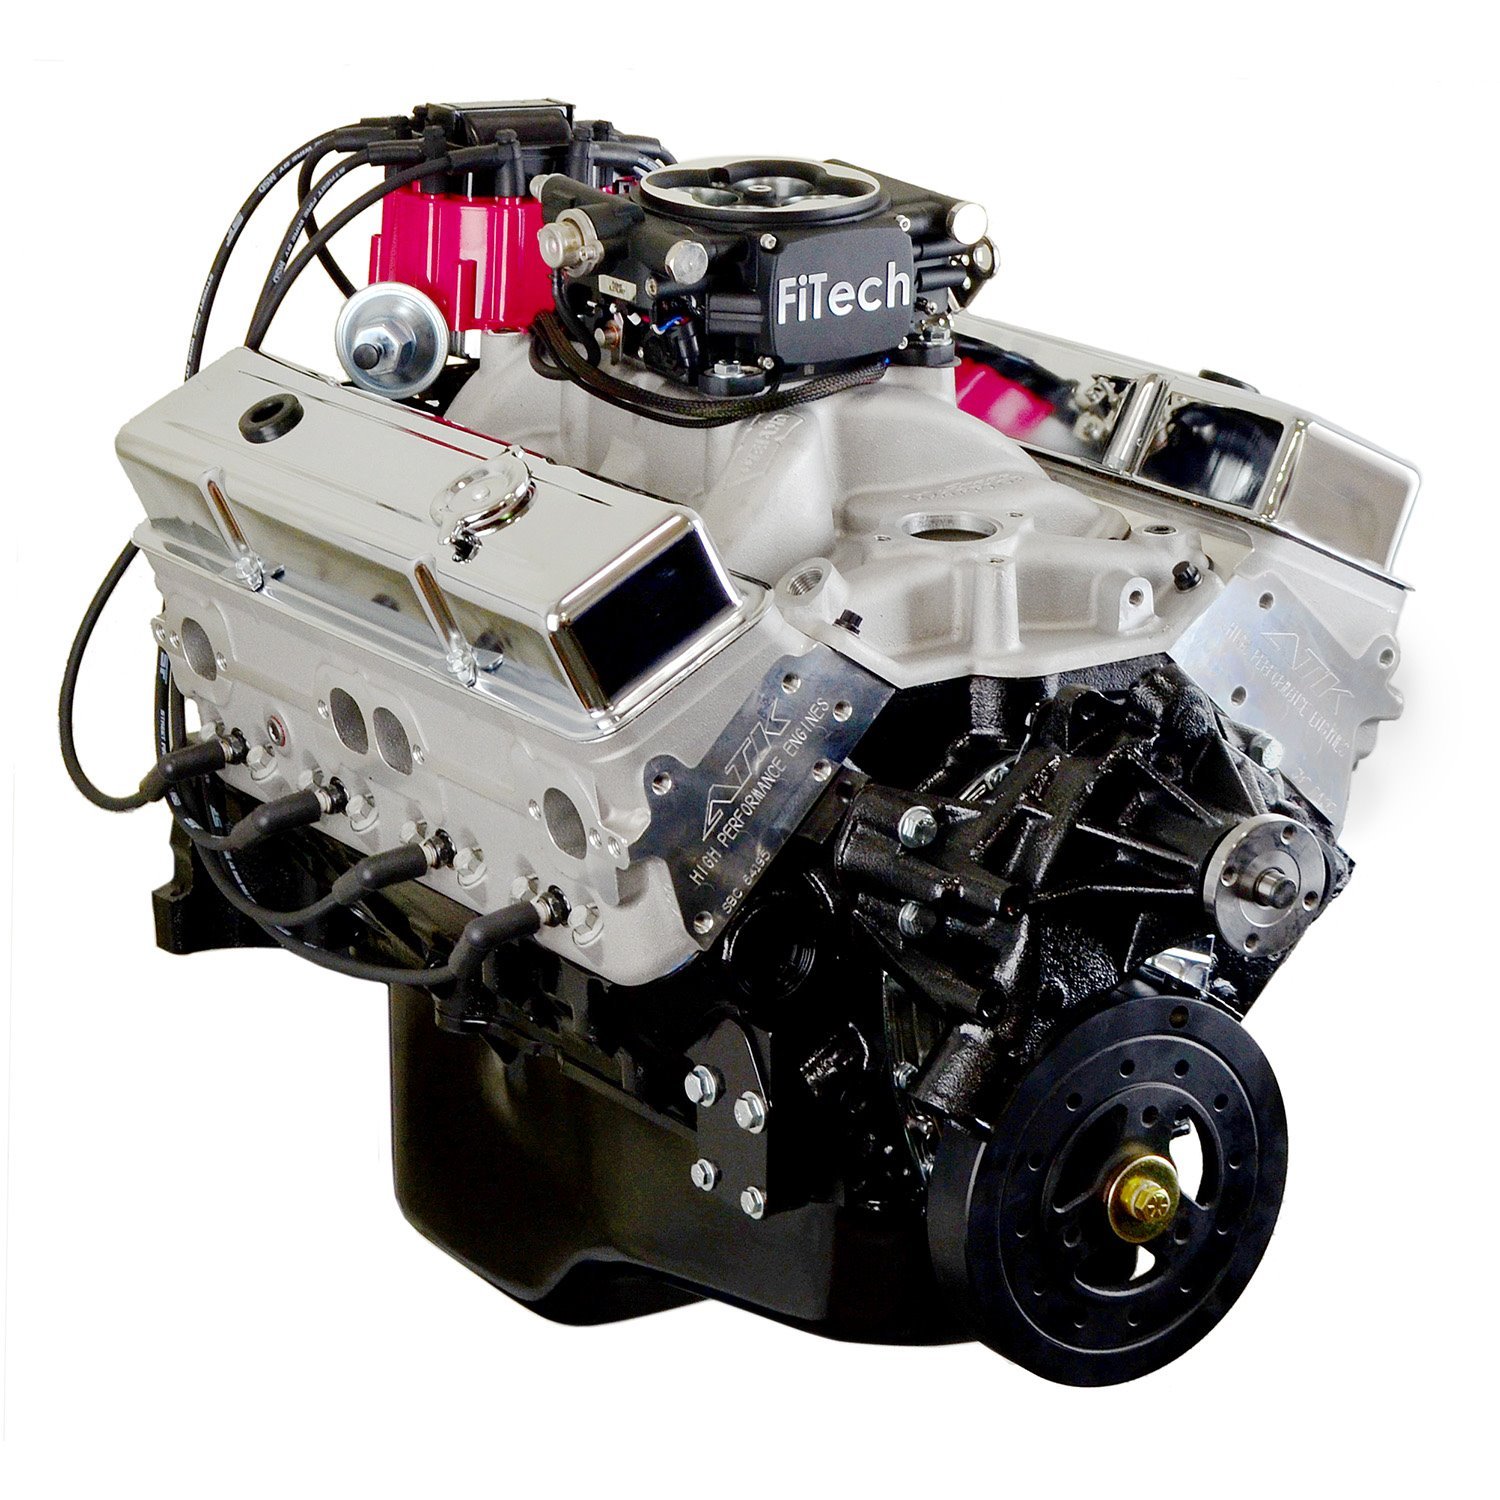 HP89C-EFI High Performance Crate Engine Small Block Chevy 350ci / 390HP / 420TQ